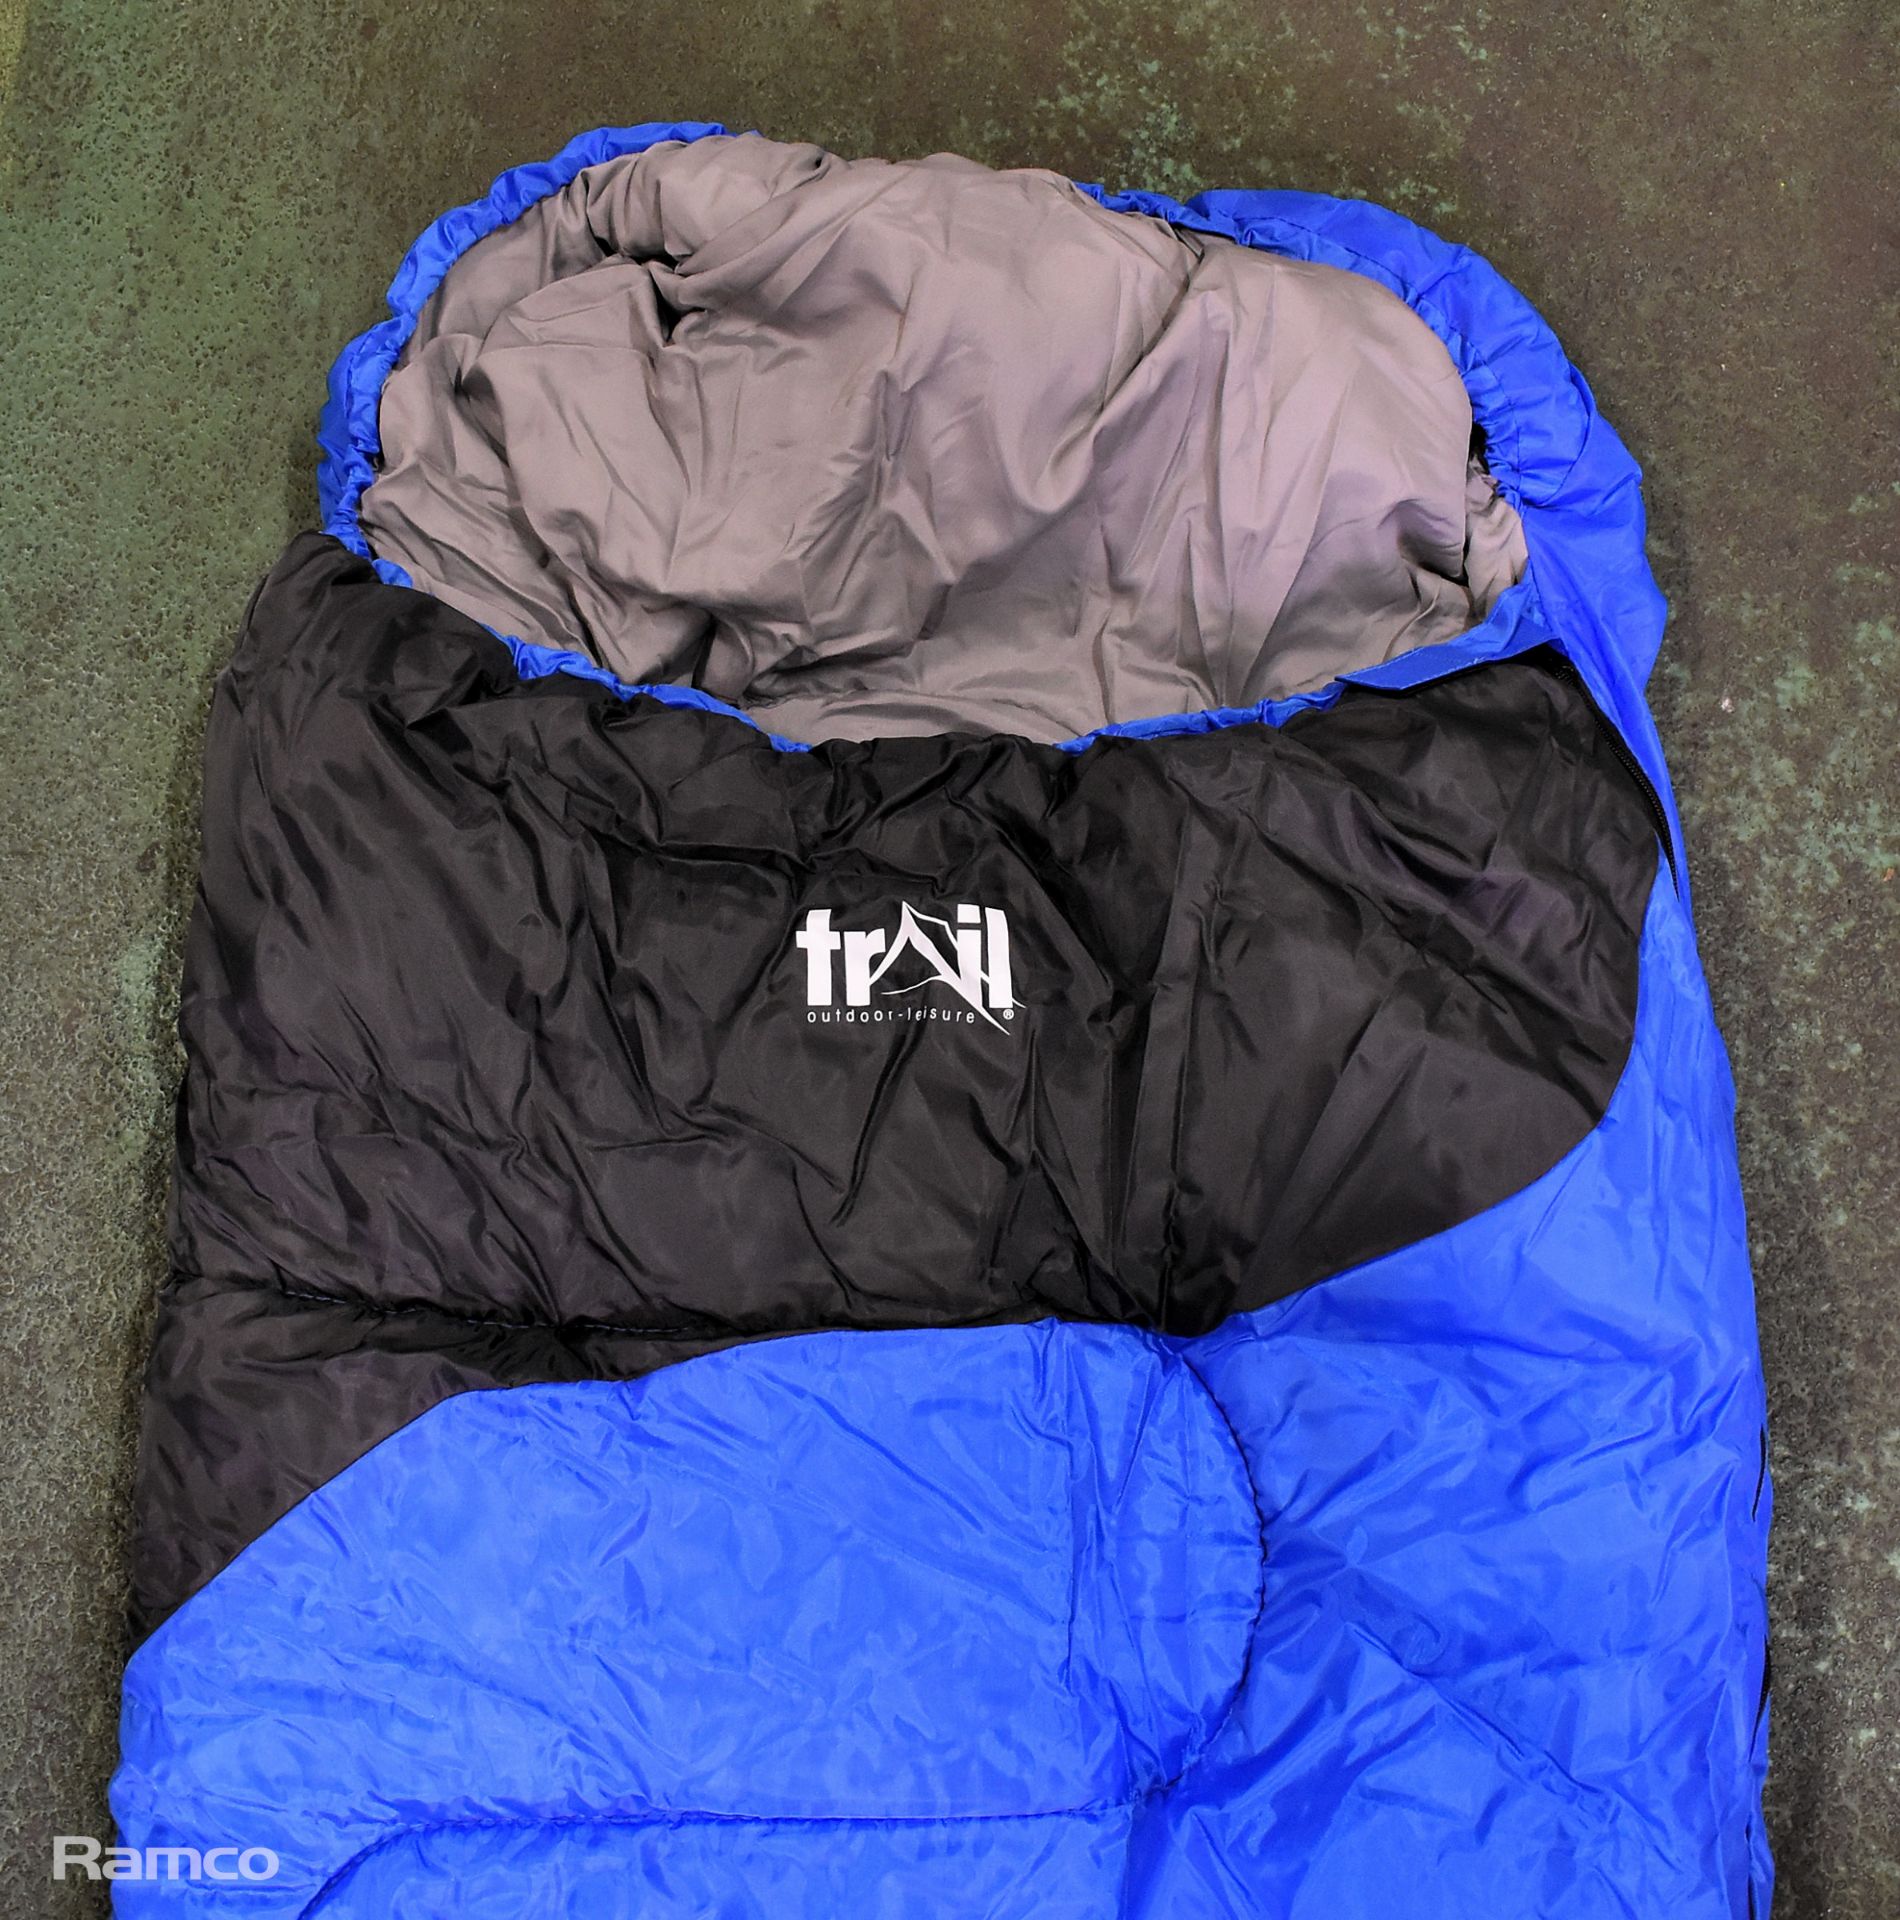 Overnight adventure outdoor sleeping bag in a rucksack - Bild 4 aus 6